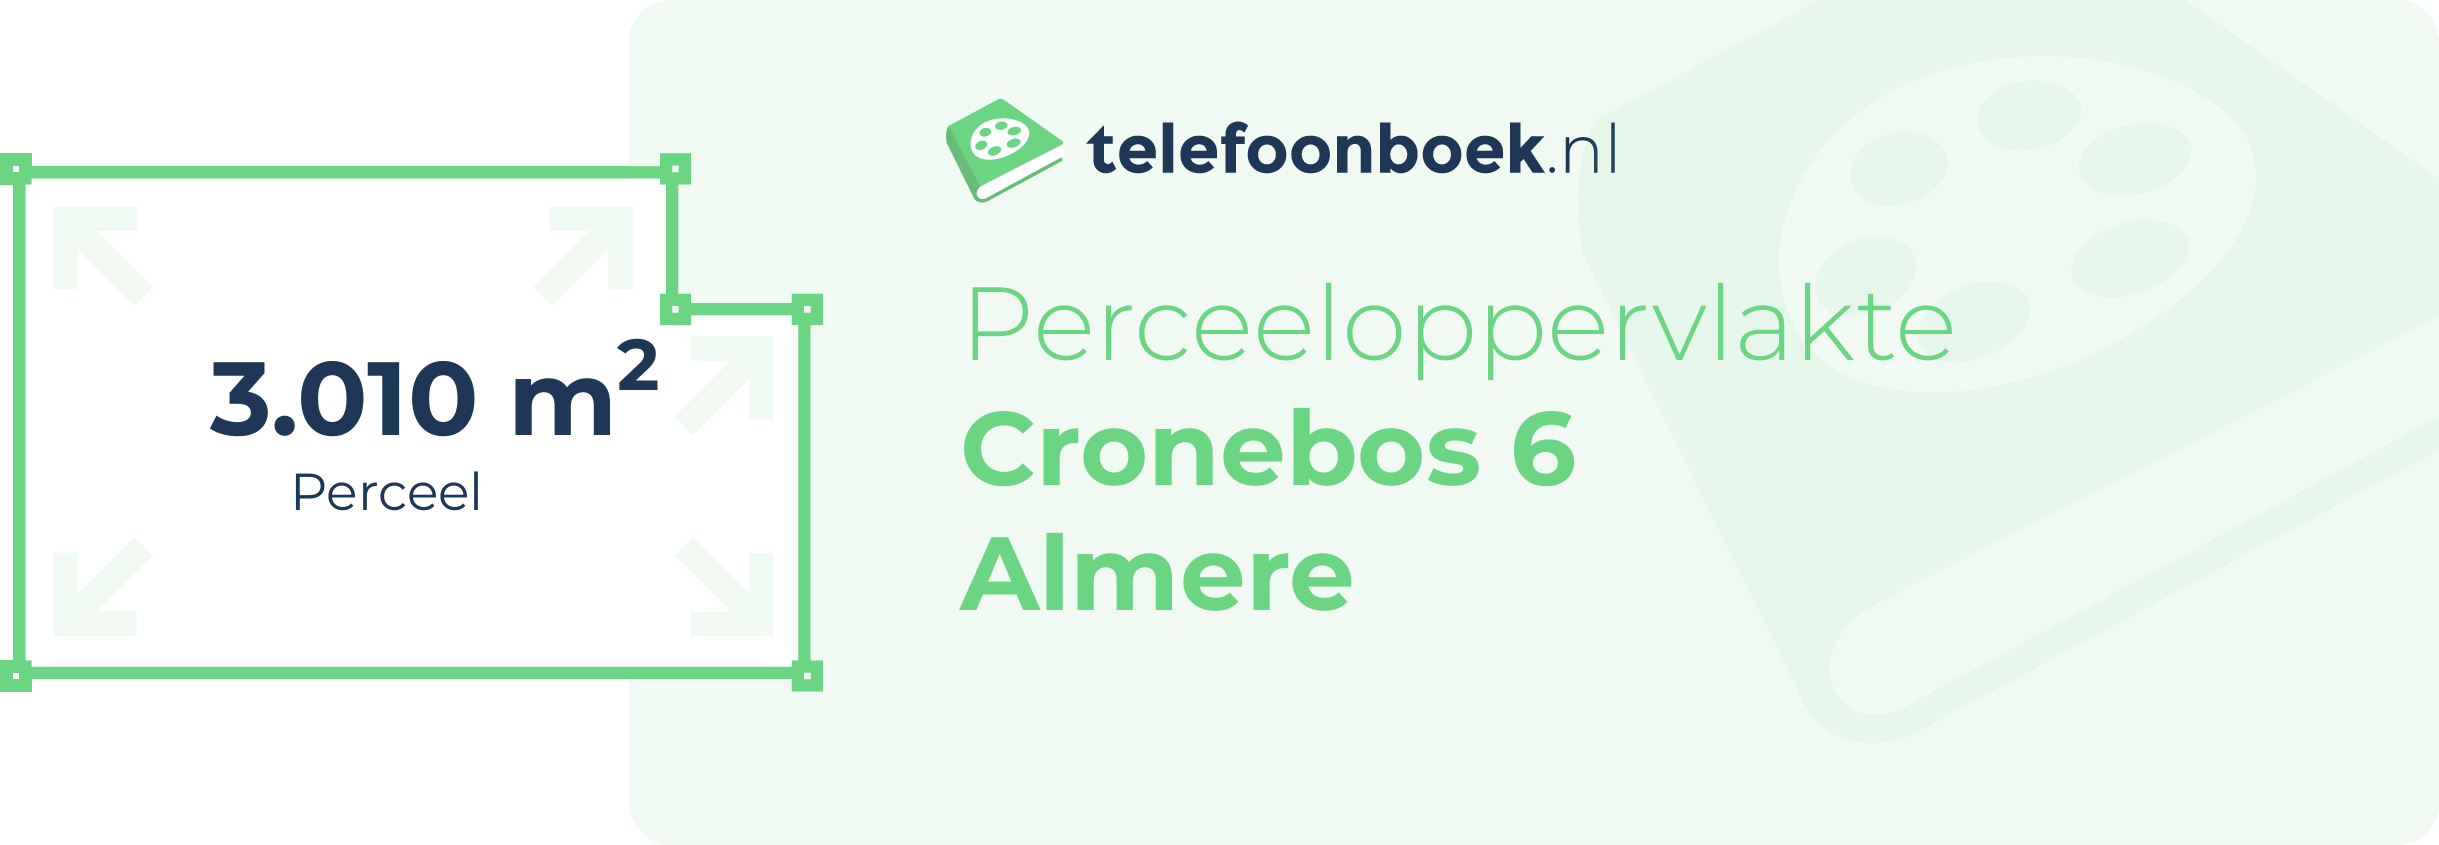 Perceeloppervlakte Cronebos 6 Almere